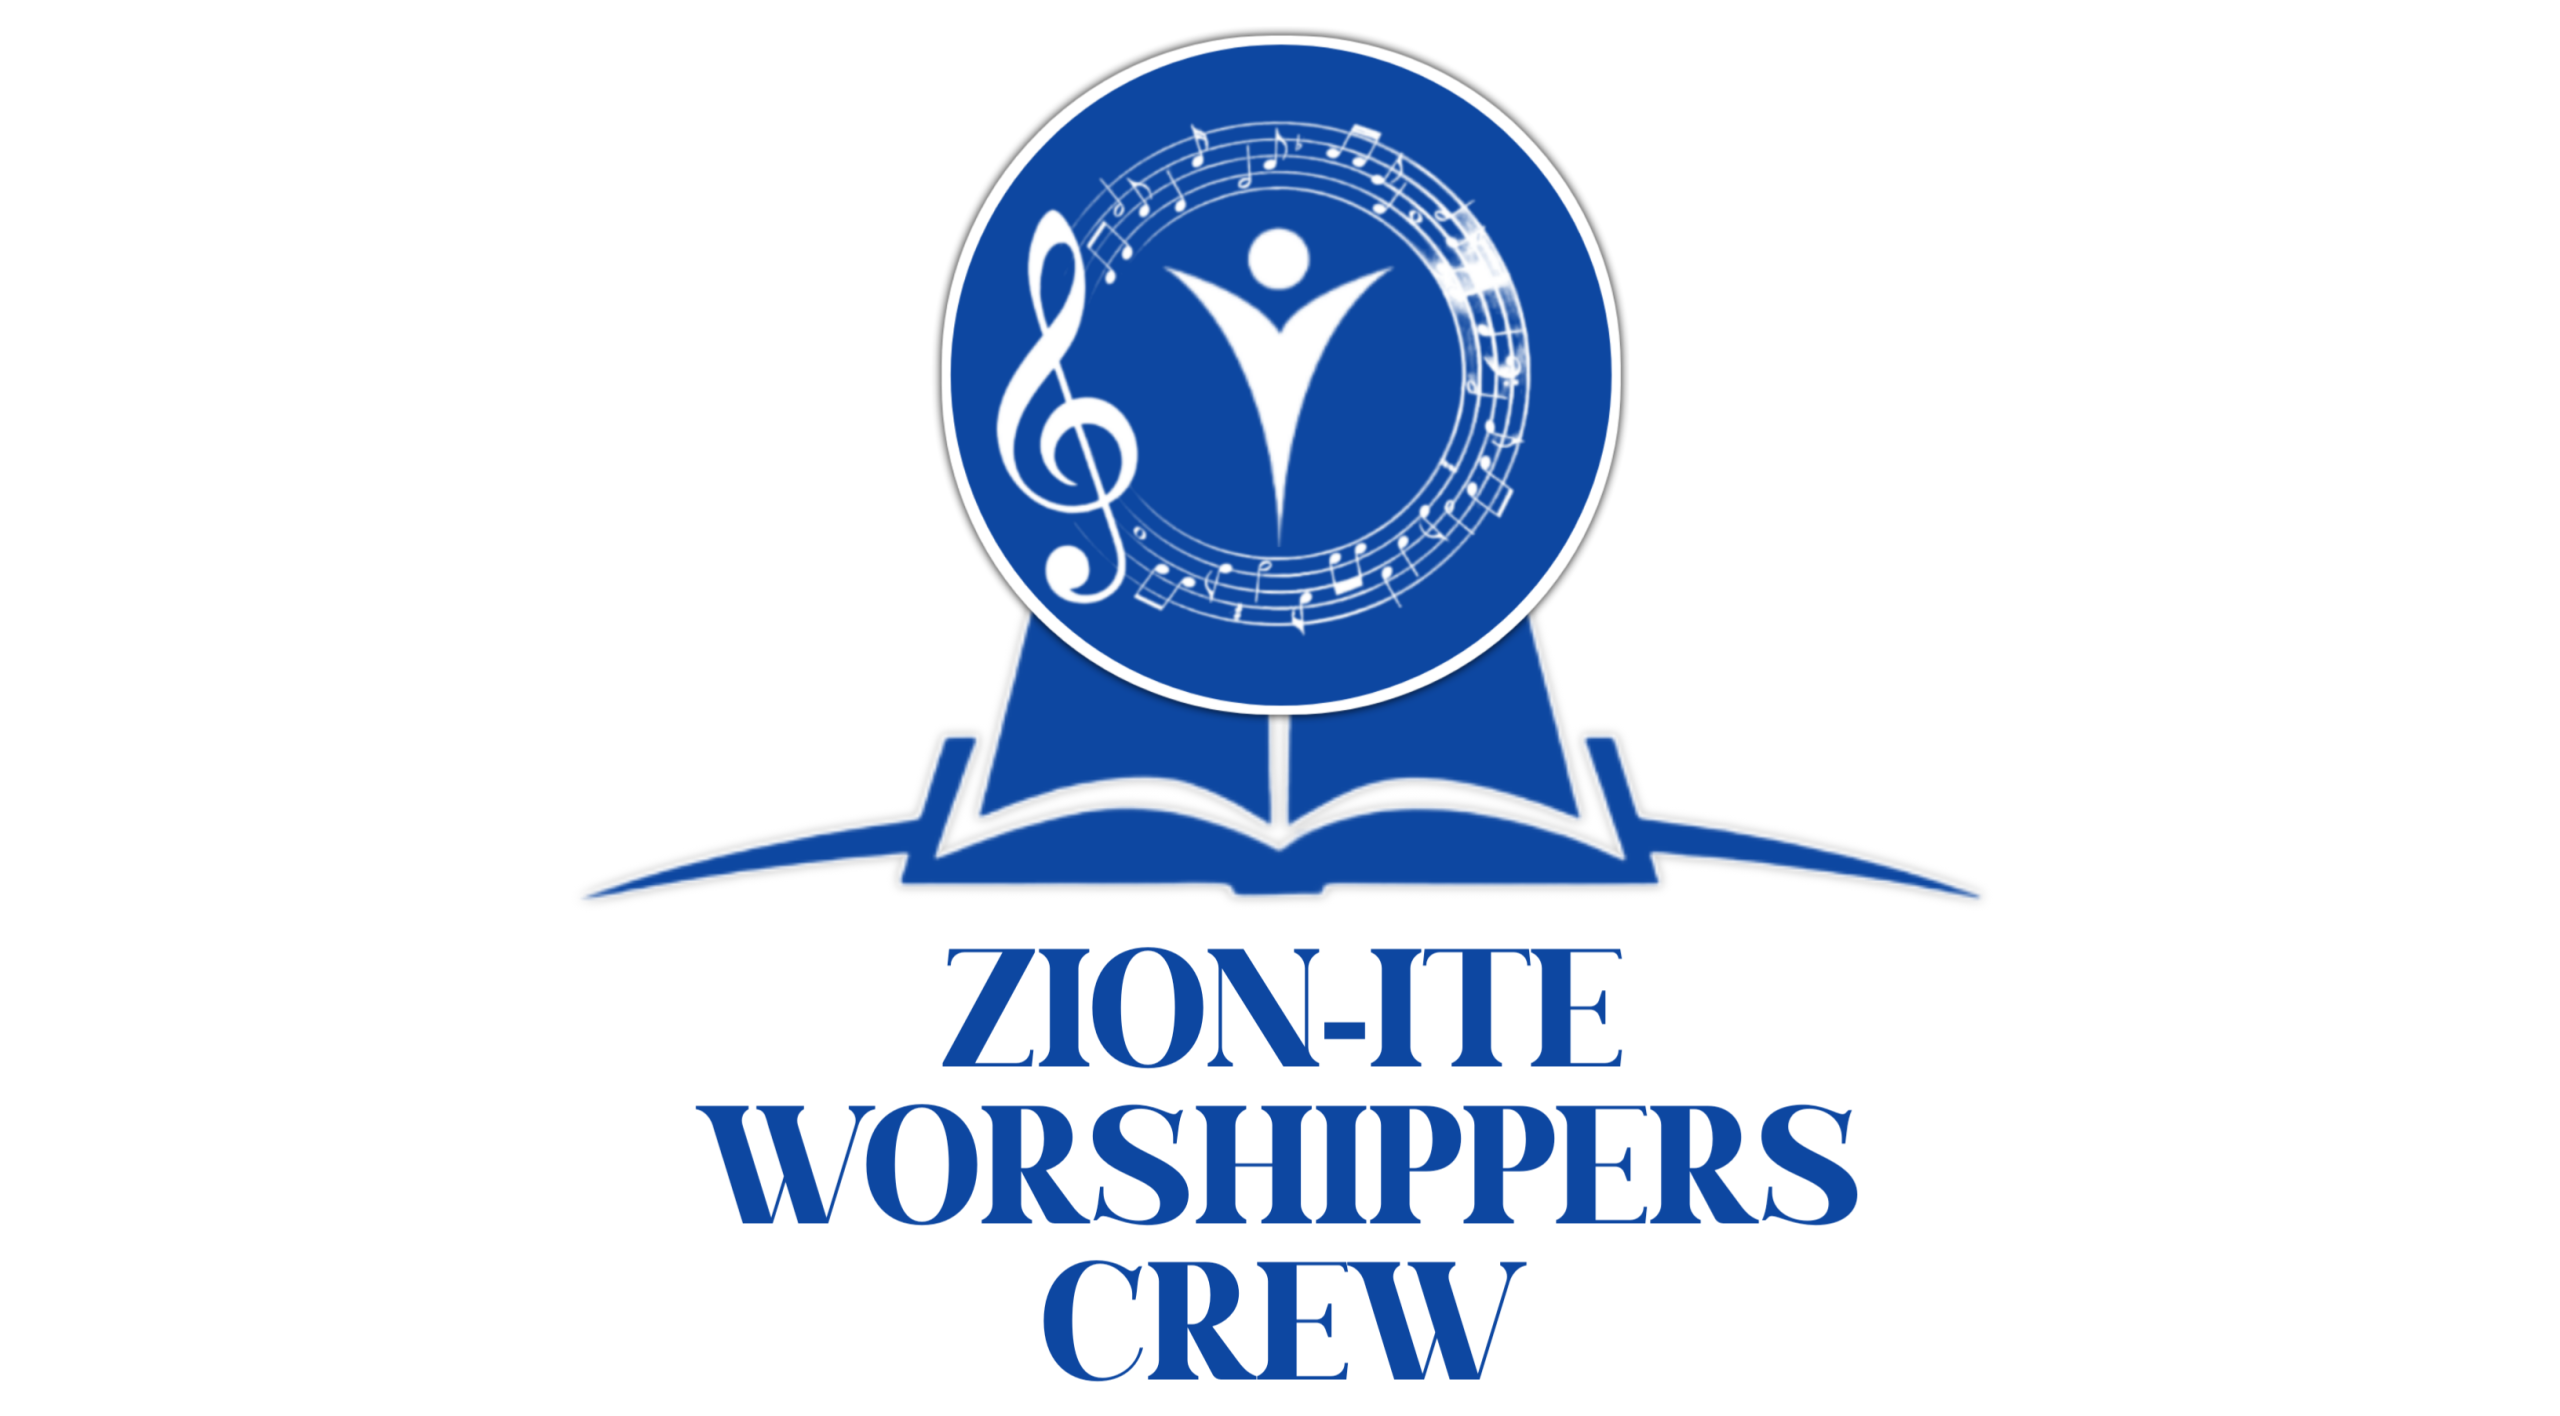 Zionite crew logo